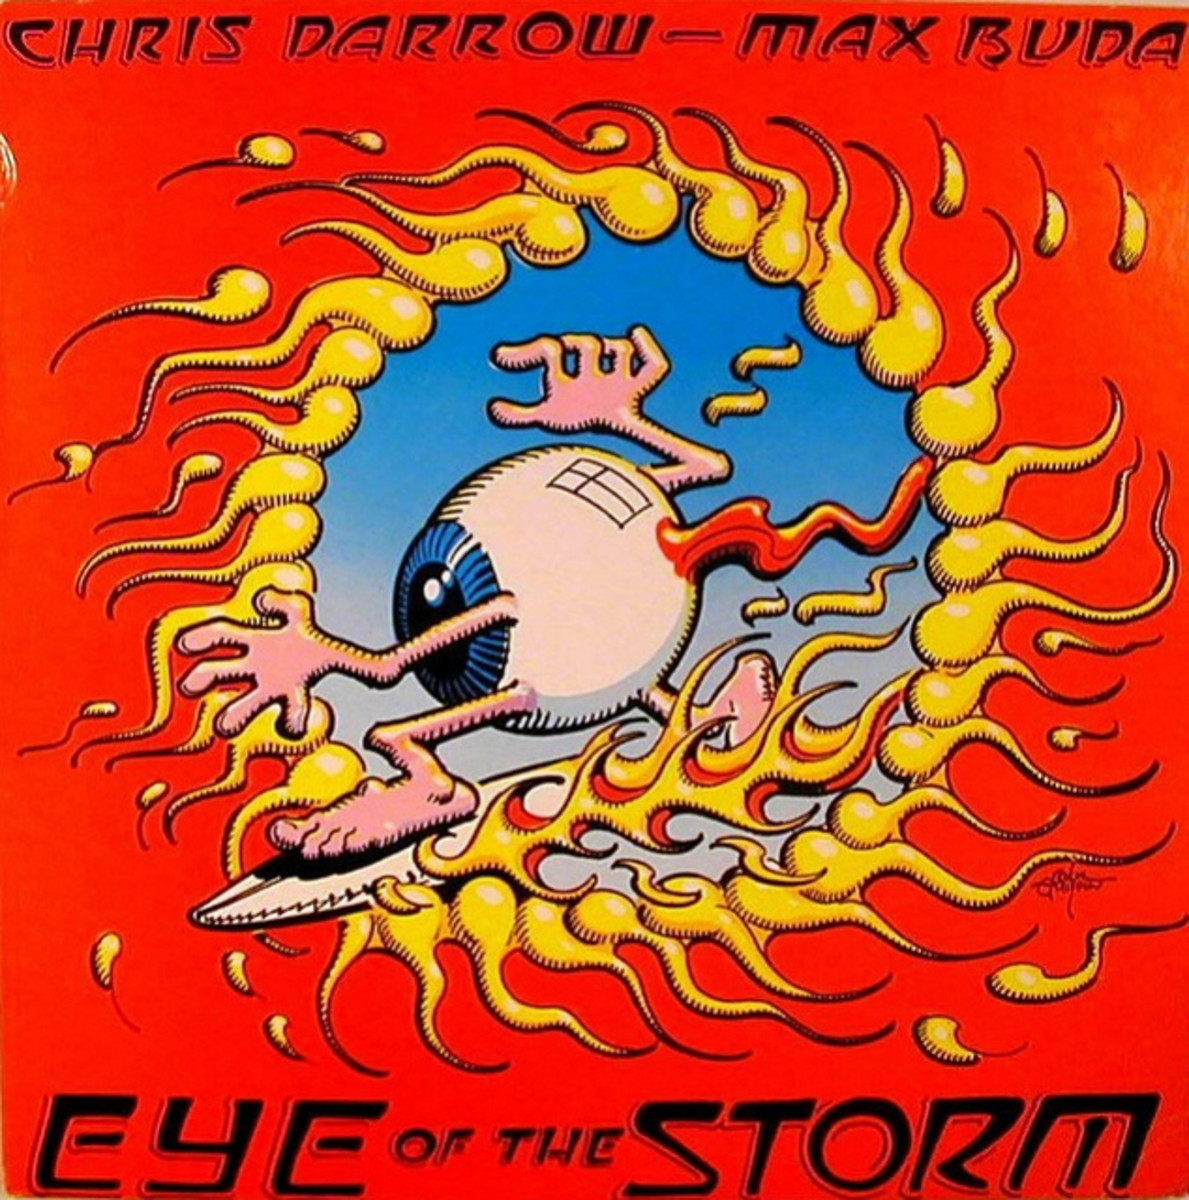 Chris Darrow & Max Buda "Eye Of The Storm" Takoma ‎TAK 7092 12" LP Vinyl Record US Pressing (1981) Album Cover Art by Rick Griffin